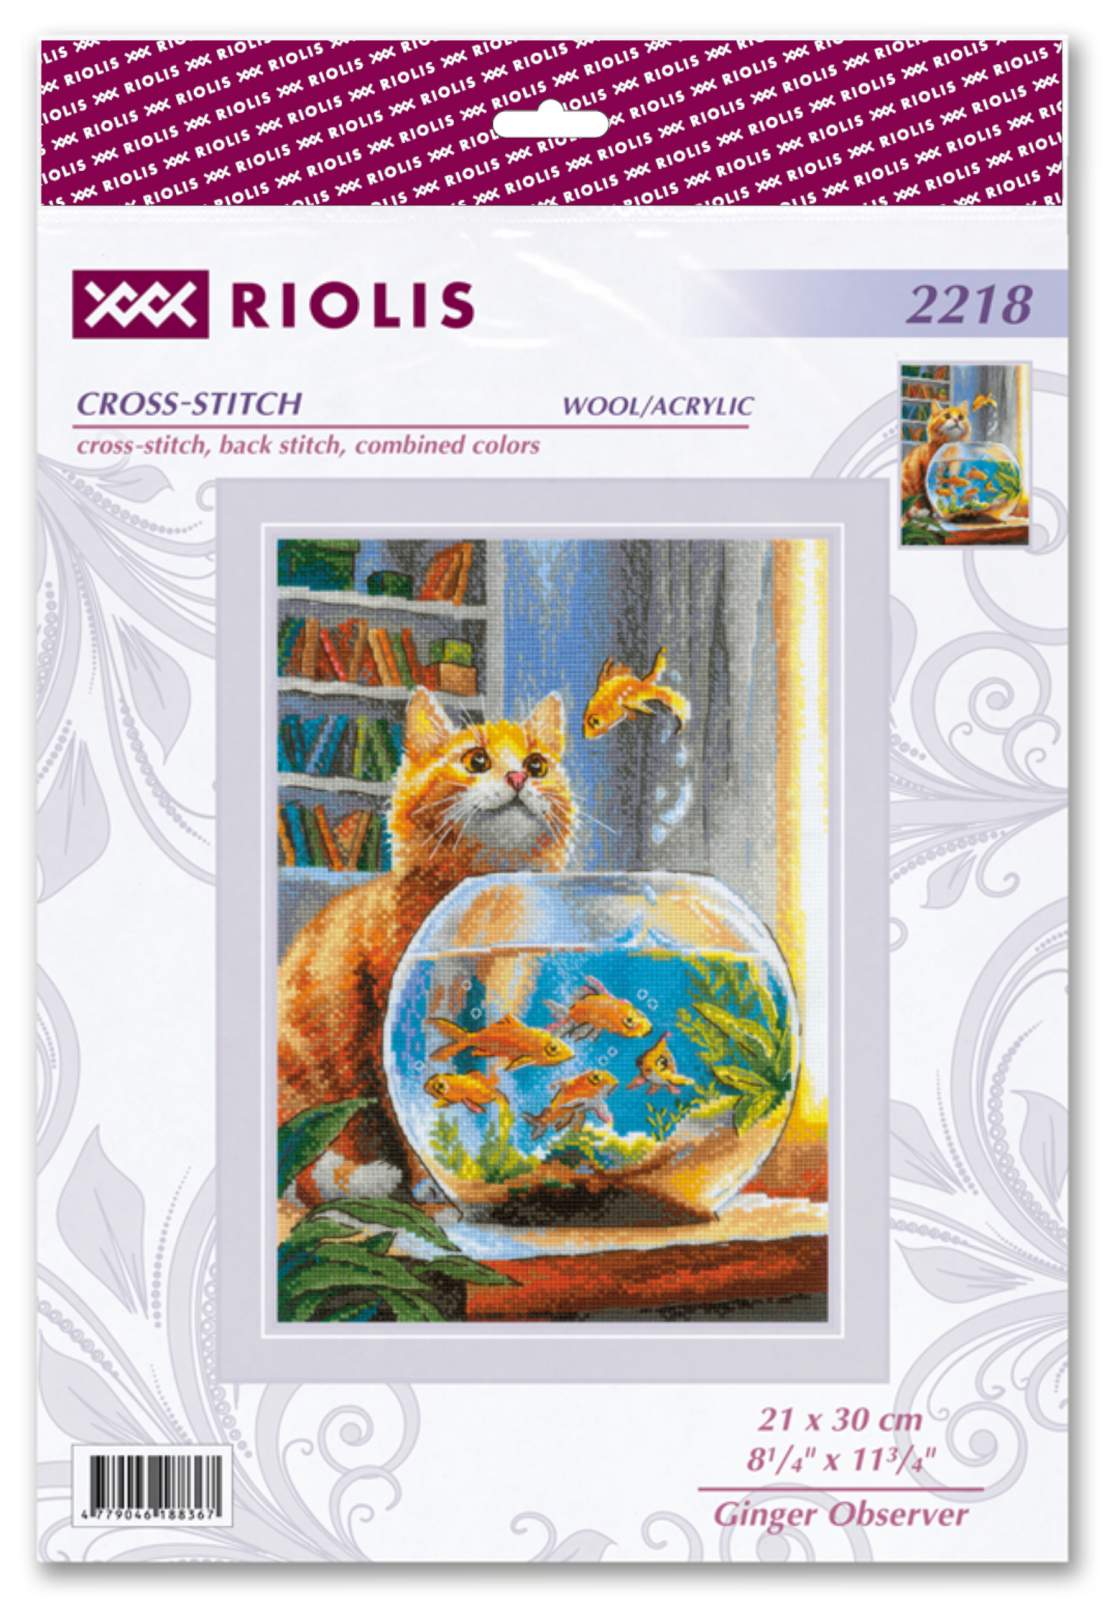 Cross Stitch Kit - "Ginger Observer" - Riolis 2218